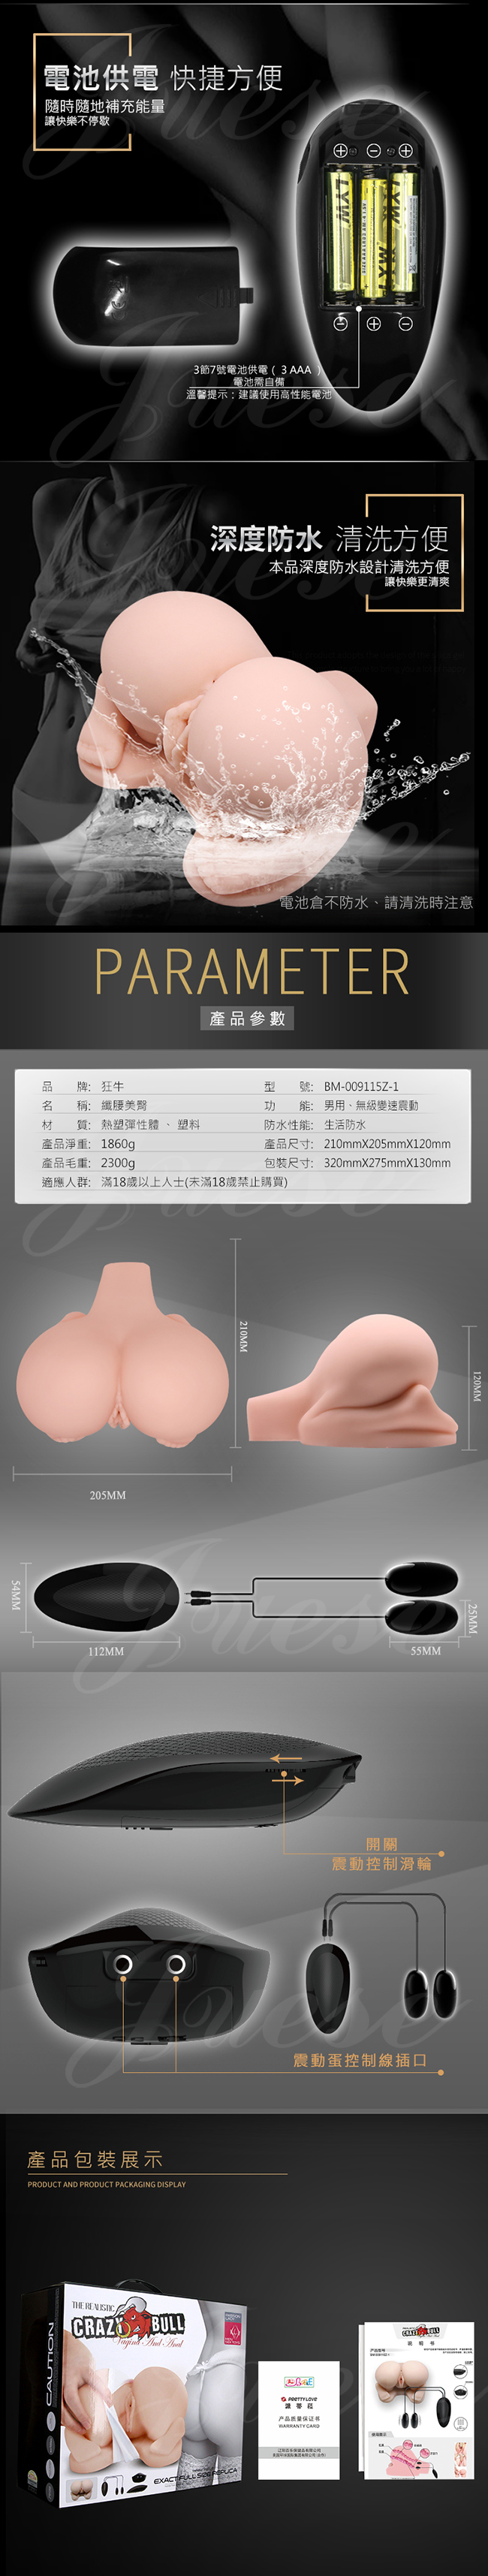 CARZY BULL-纖腰美臀 3D通道多層褶皺雙穴美臀震動自慰器-附跳蛋